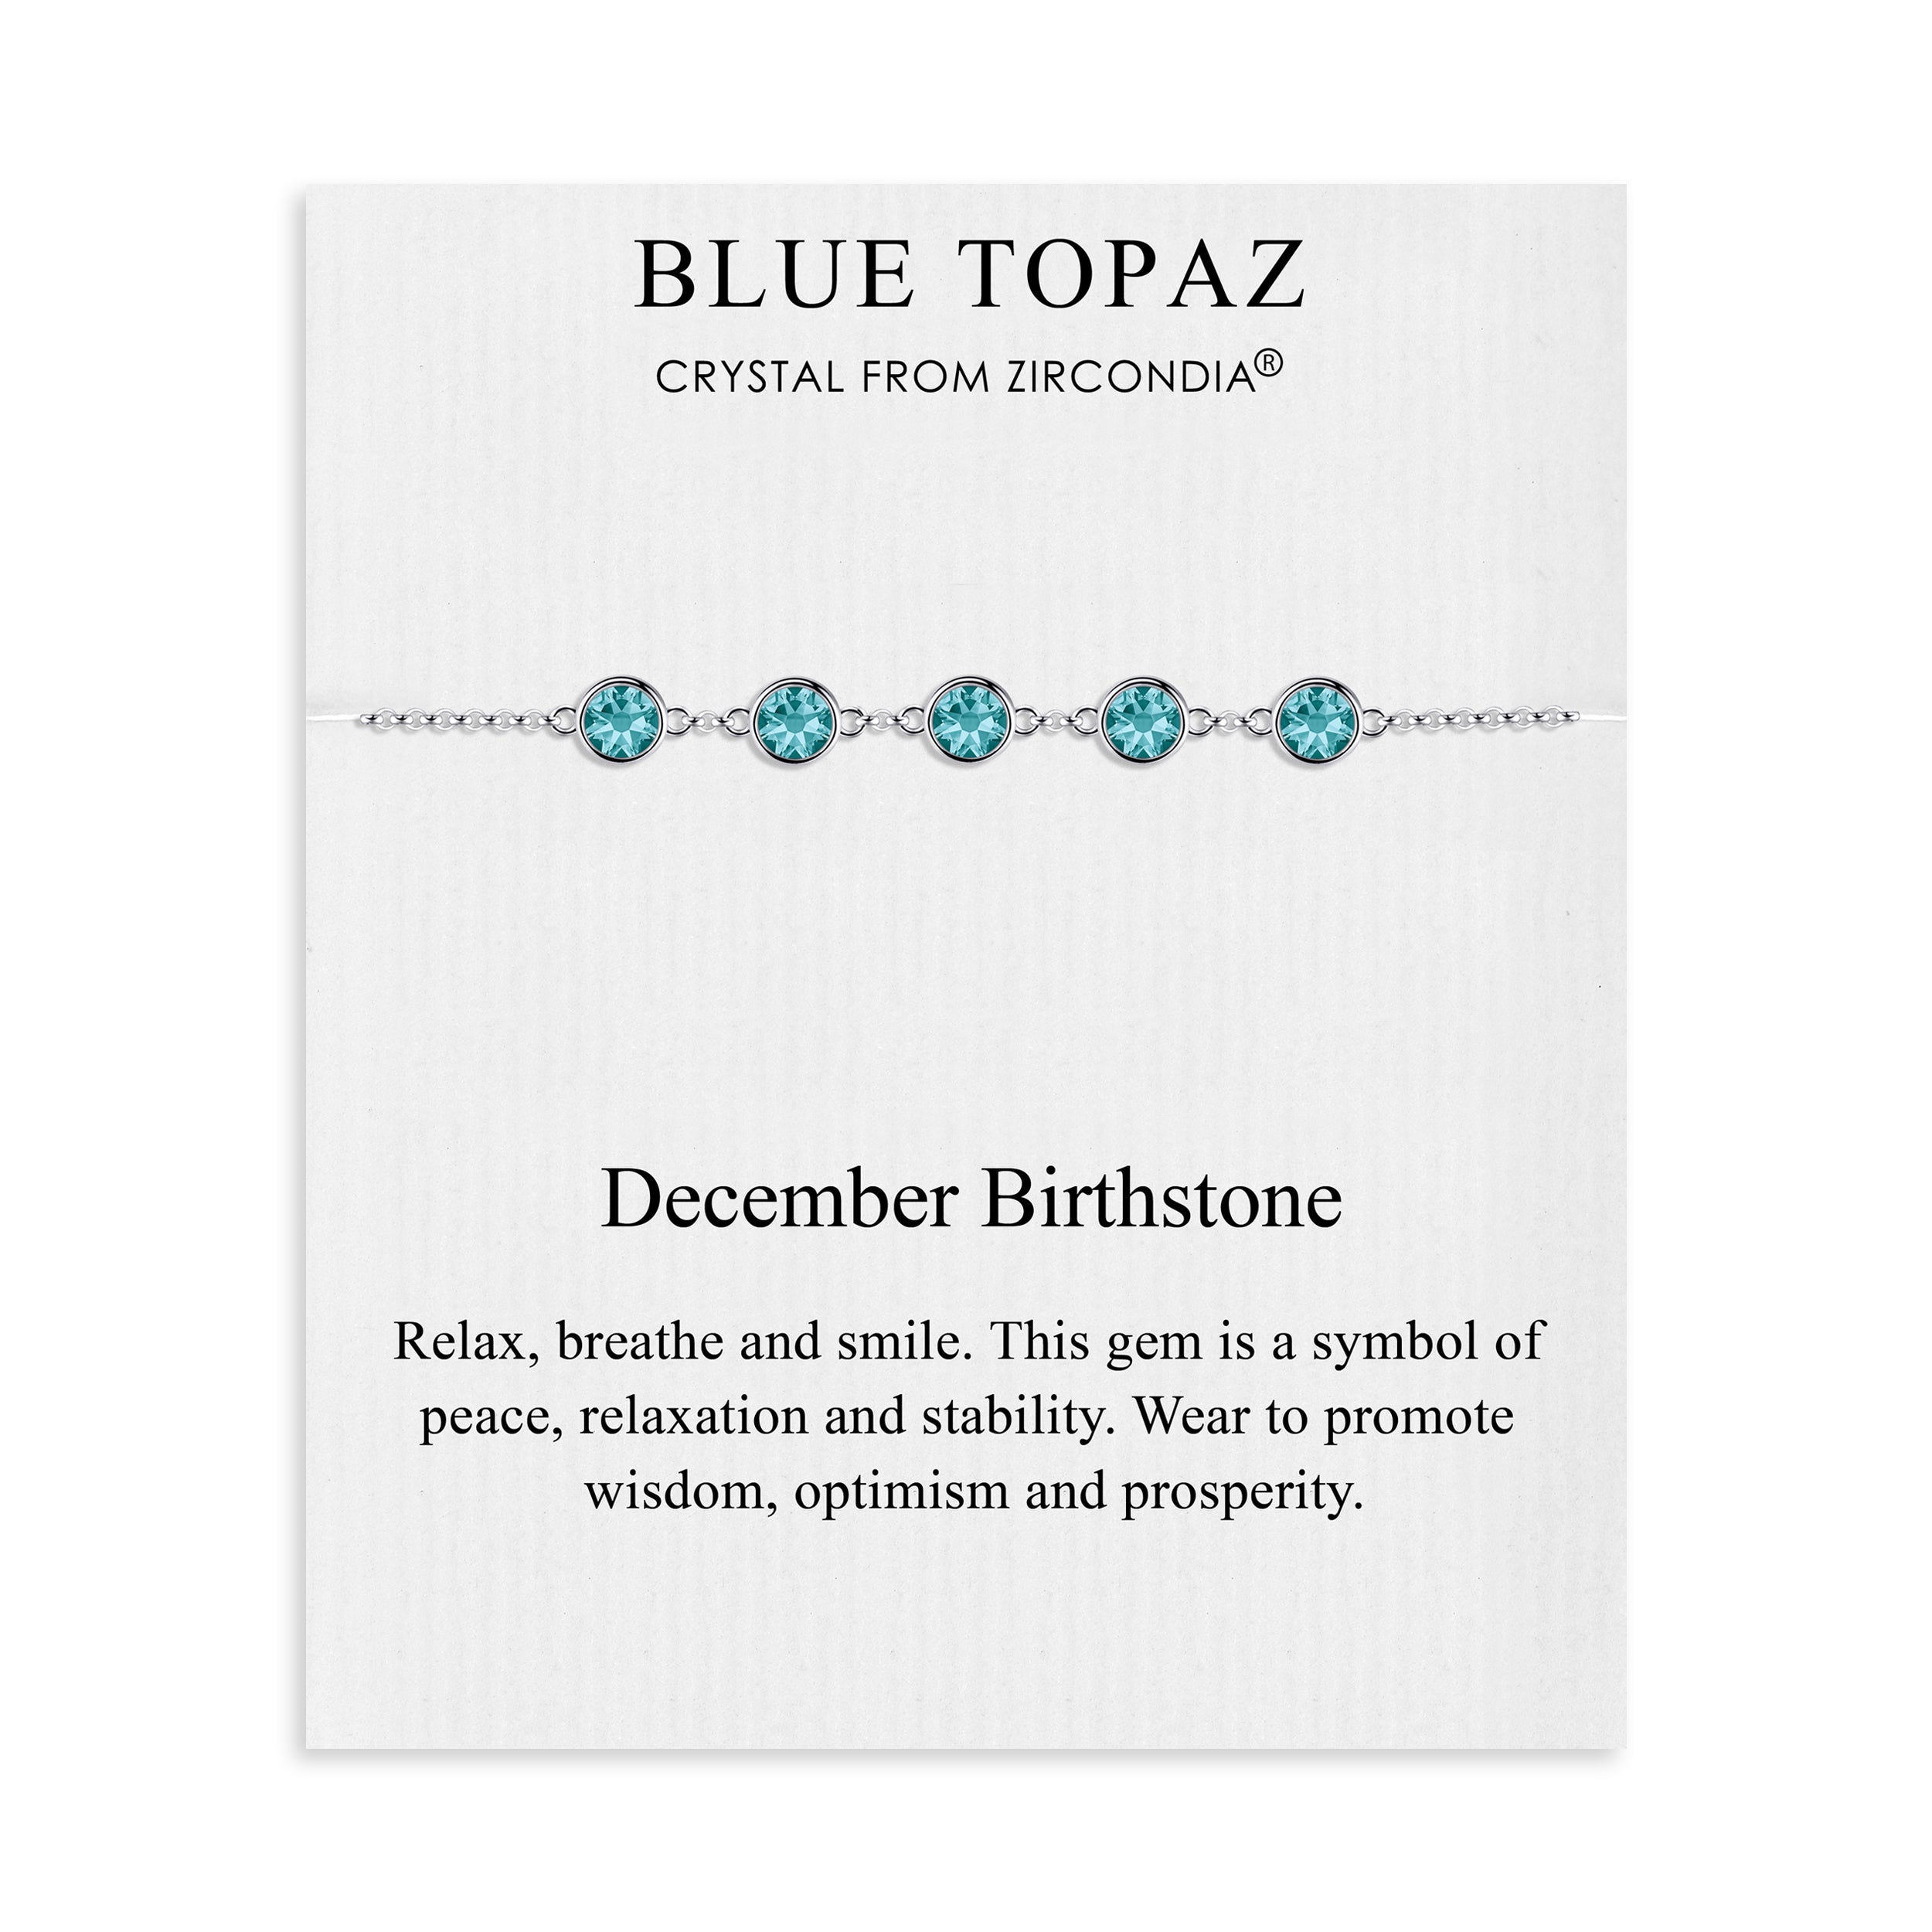 December Birthstone Bracelet Created with Blue Topaz Zircondia® Crystals by Philip Jones Jewellery